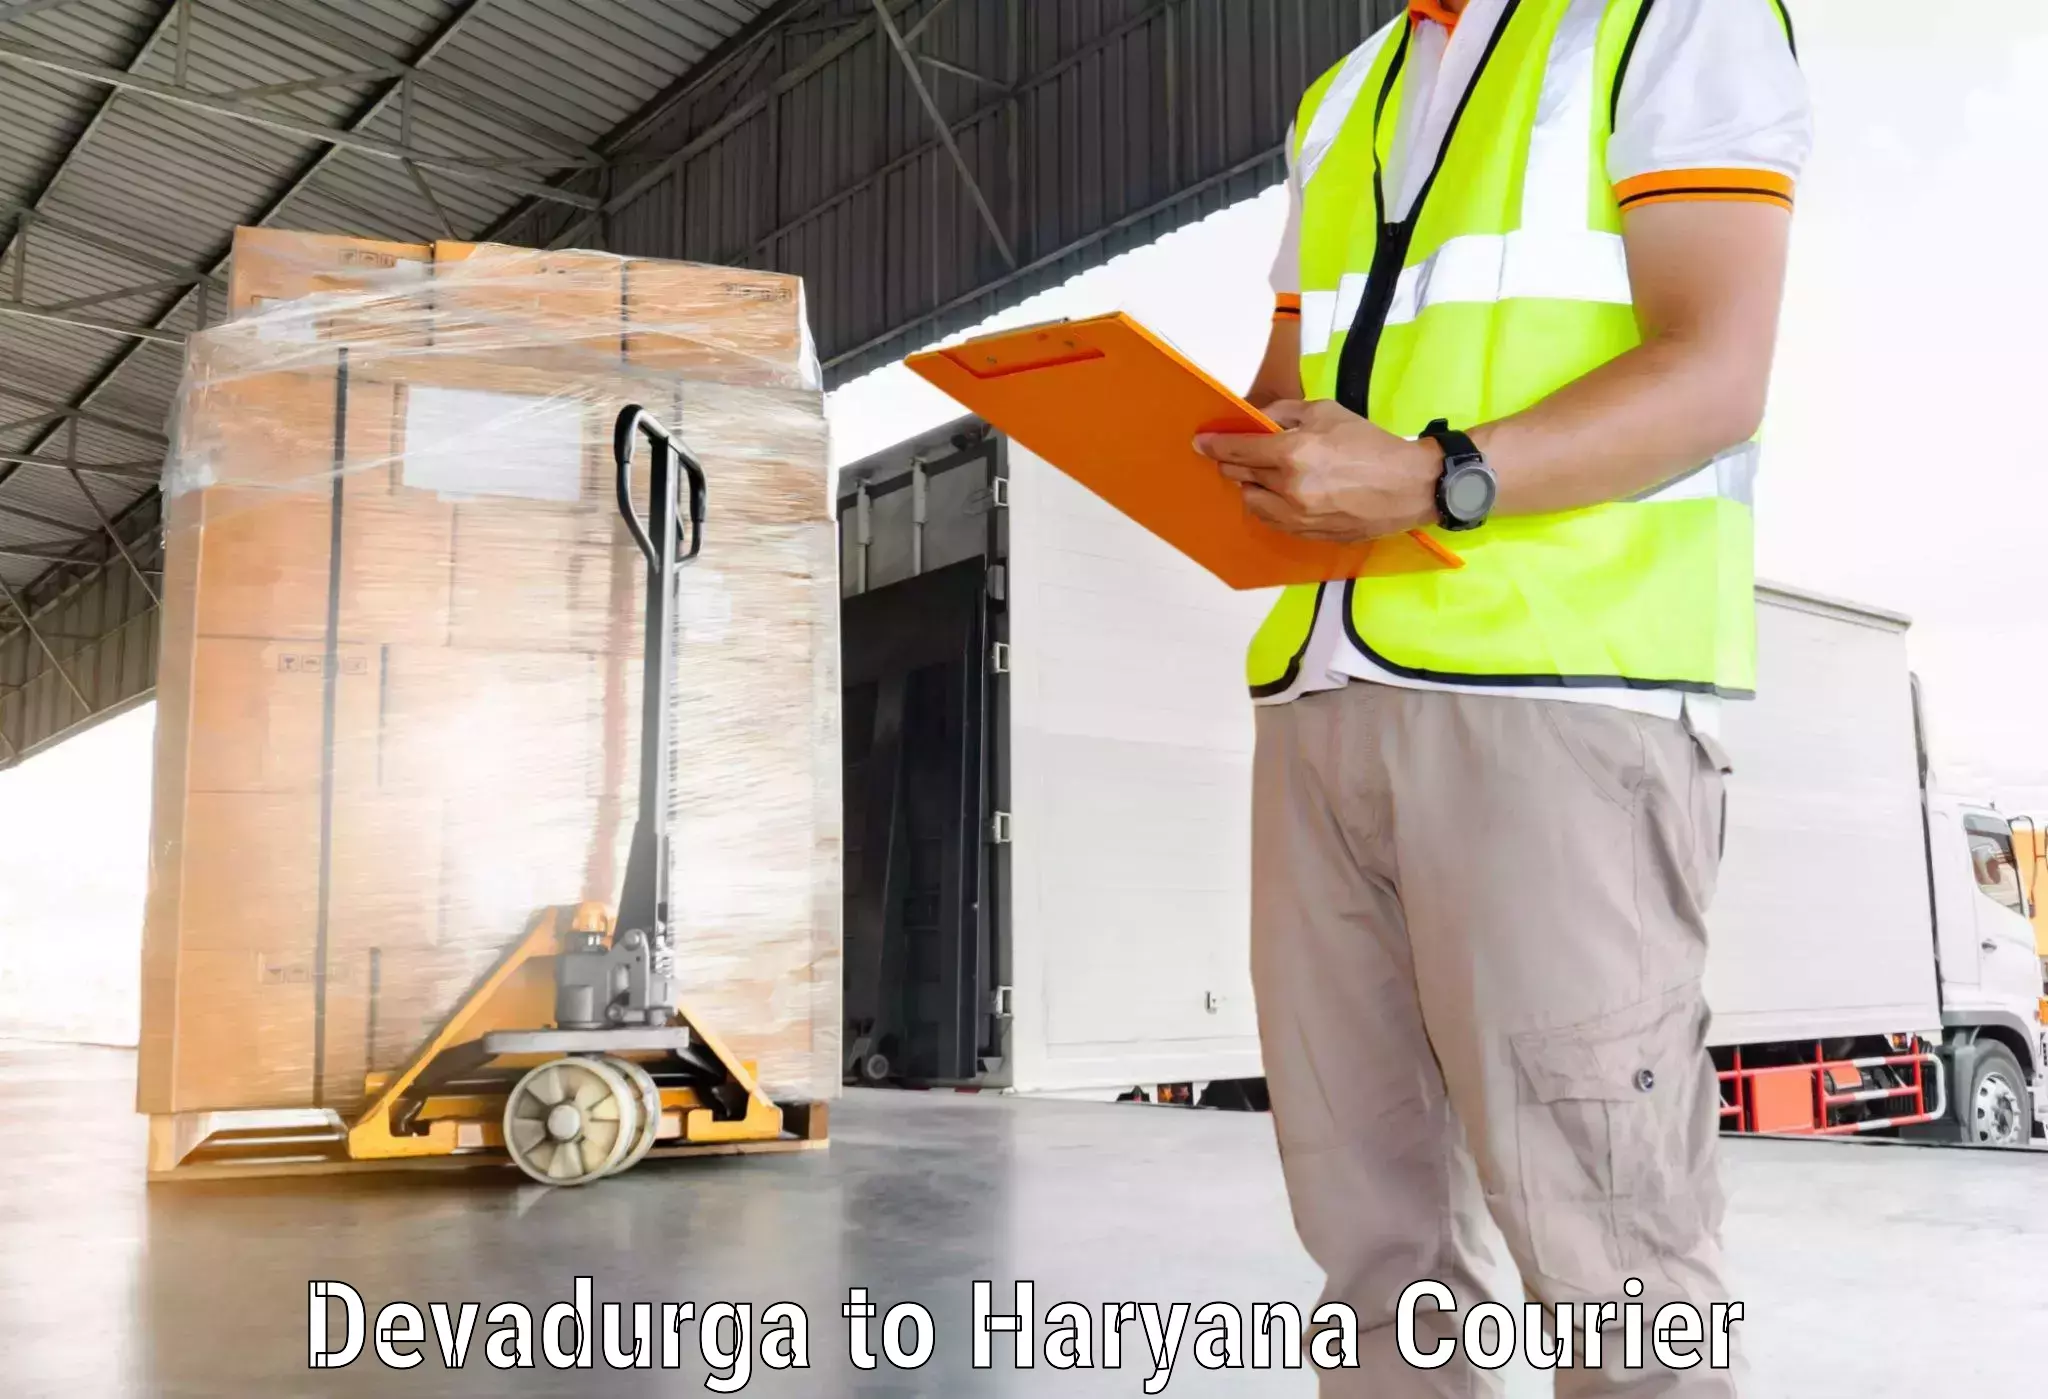 Courier service efficiency Devadurga to Gurgaon